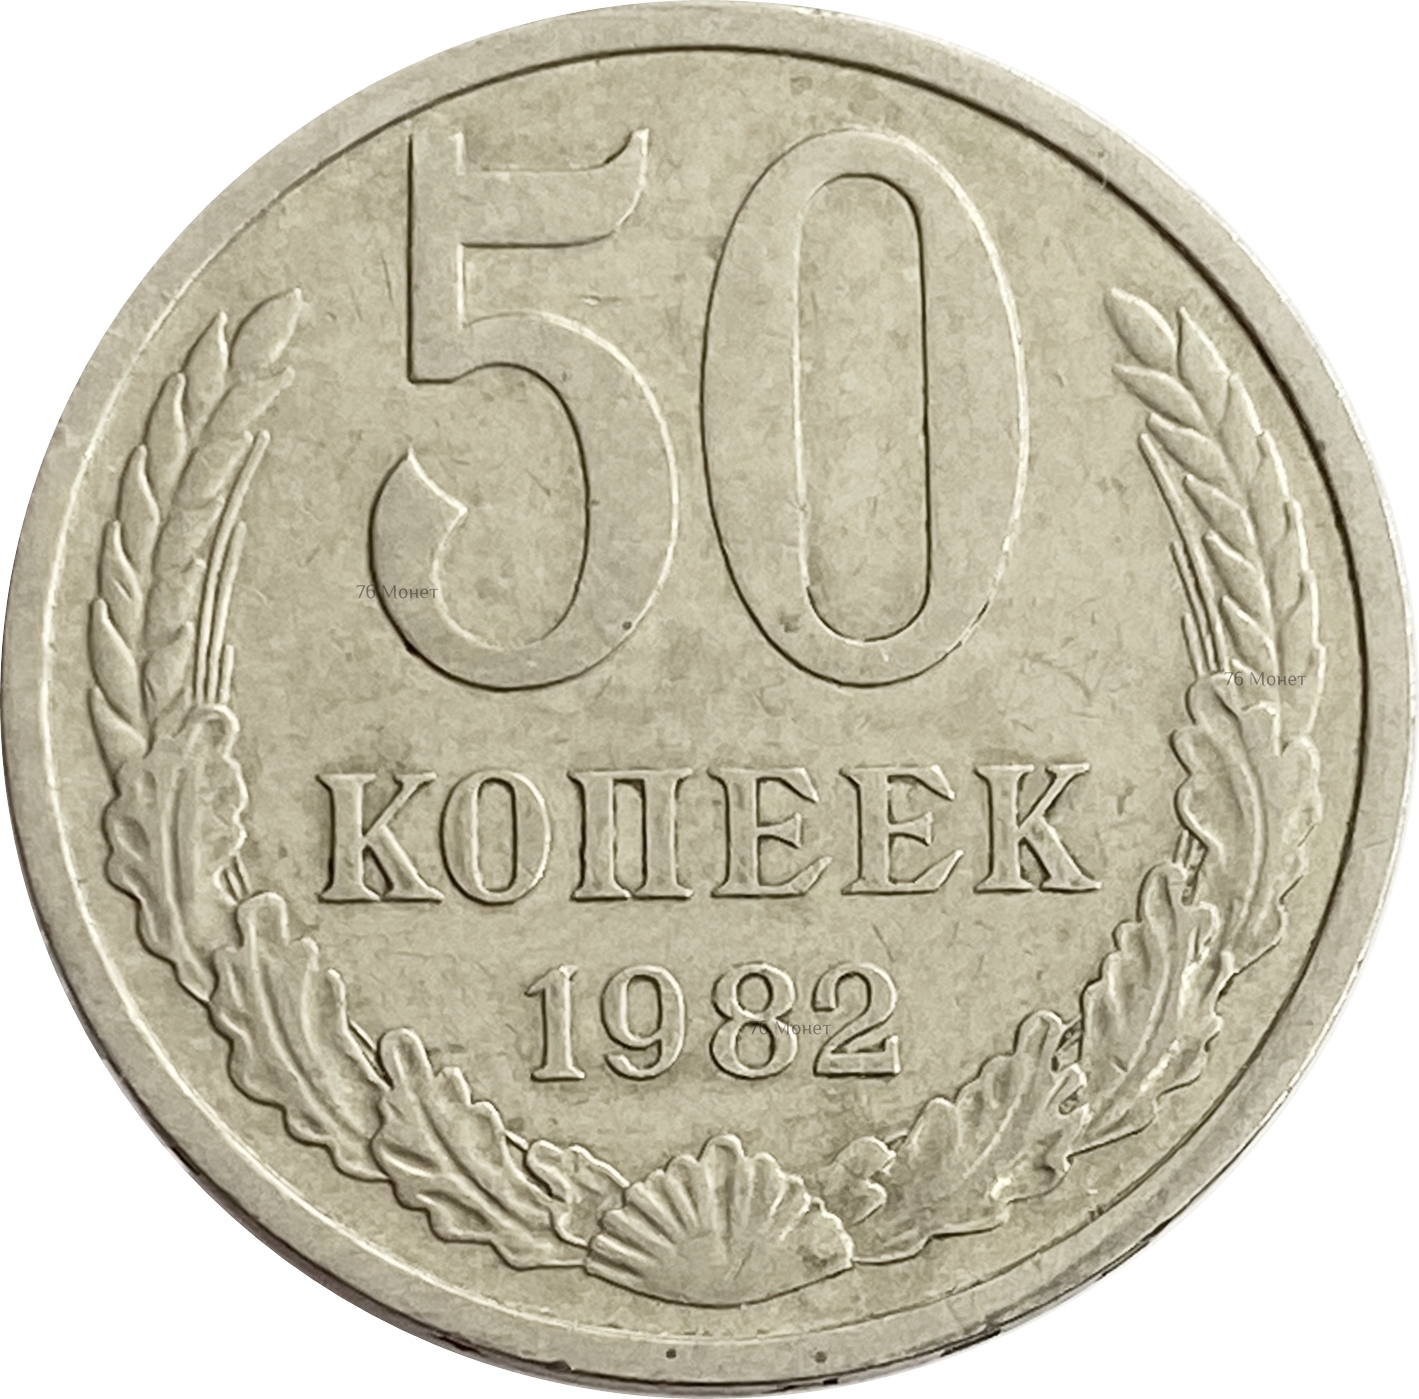 Монета пятьдесят копеек пятьдесят лет. 50 Копеек 1961. Мунгу монета. 50 Копеек СССР 1961. Монета 20 копеек СССР 1991 год.